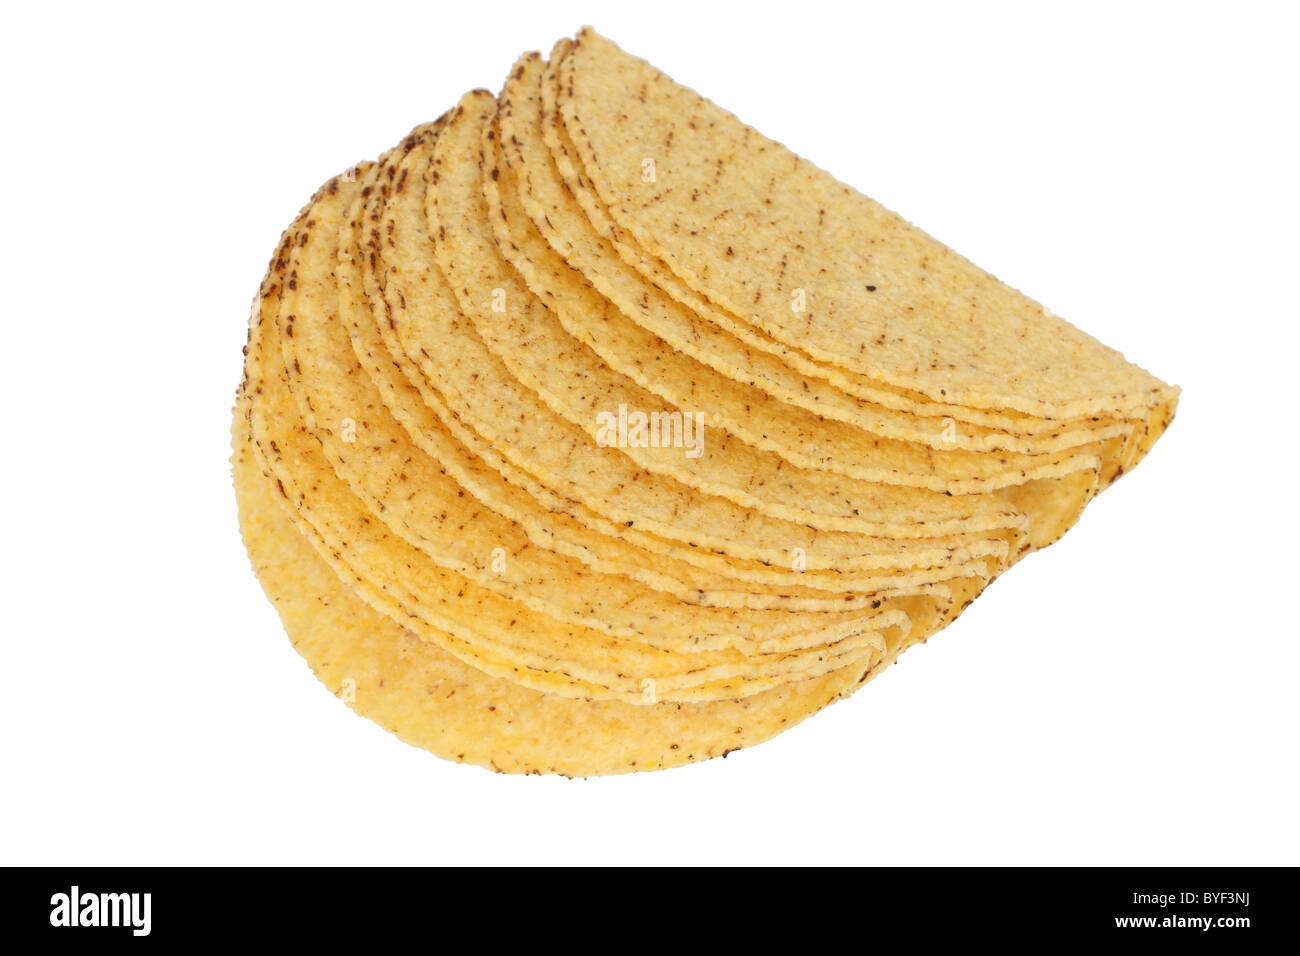 Taco shells isolated over white background Stock Photo